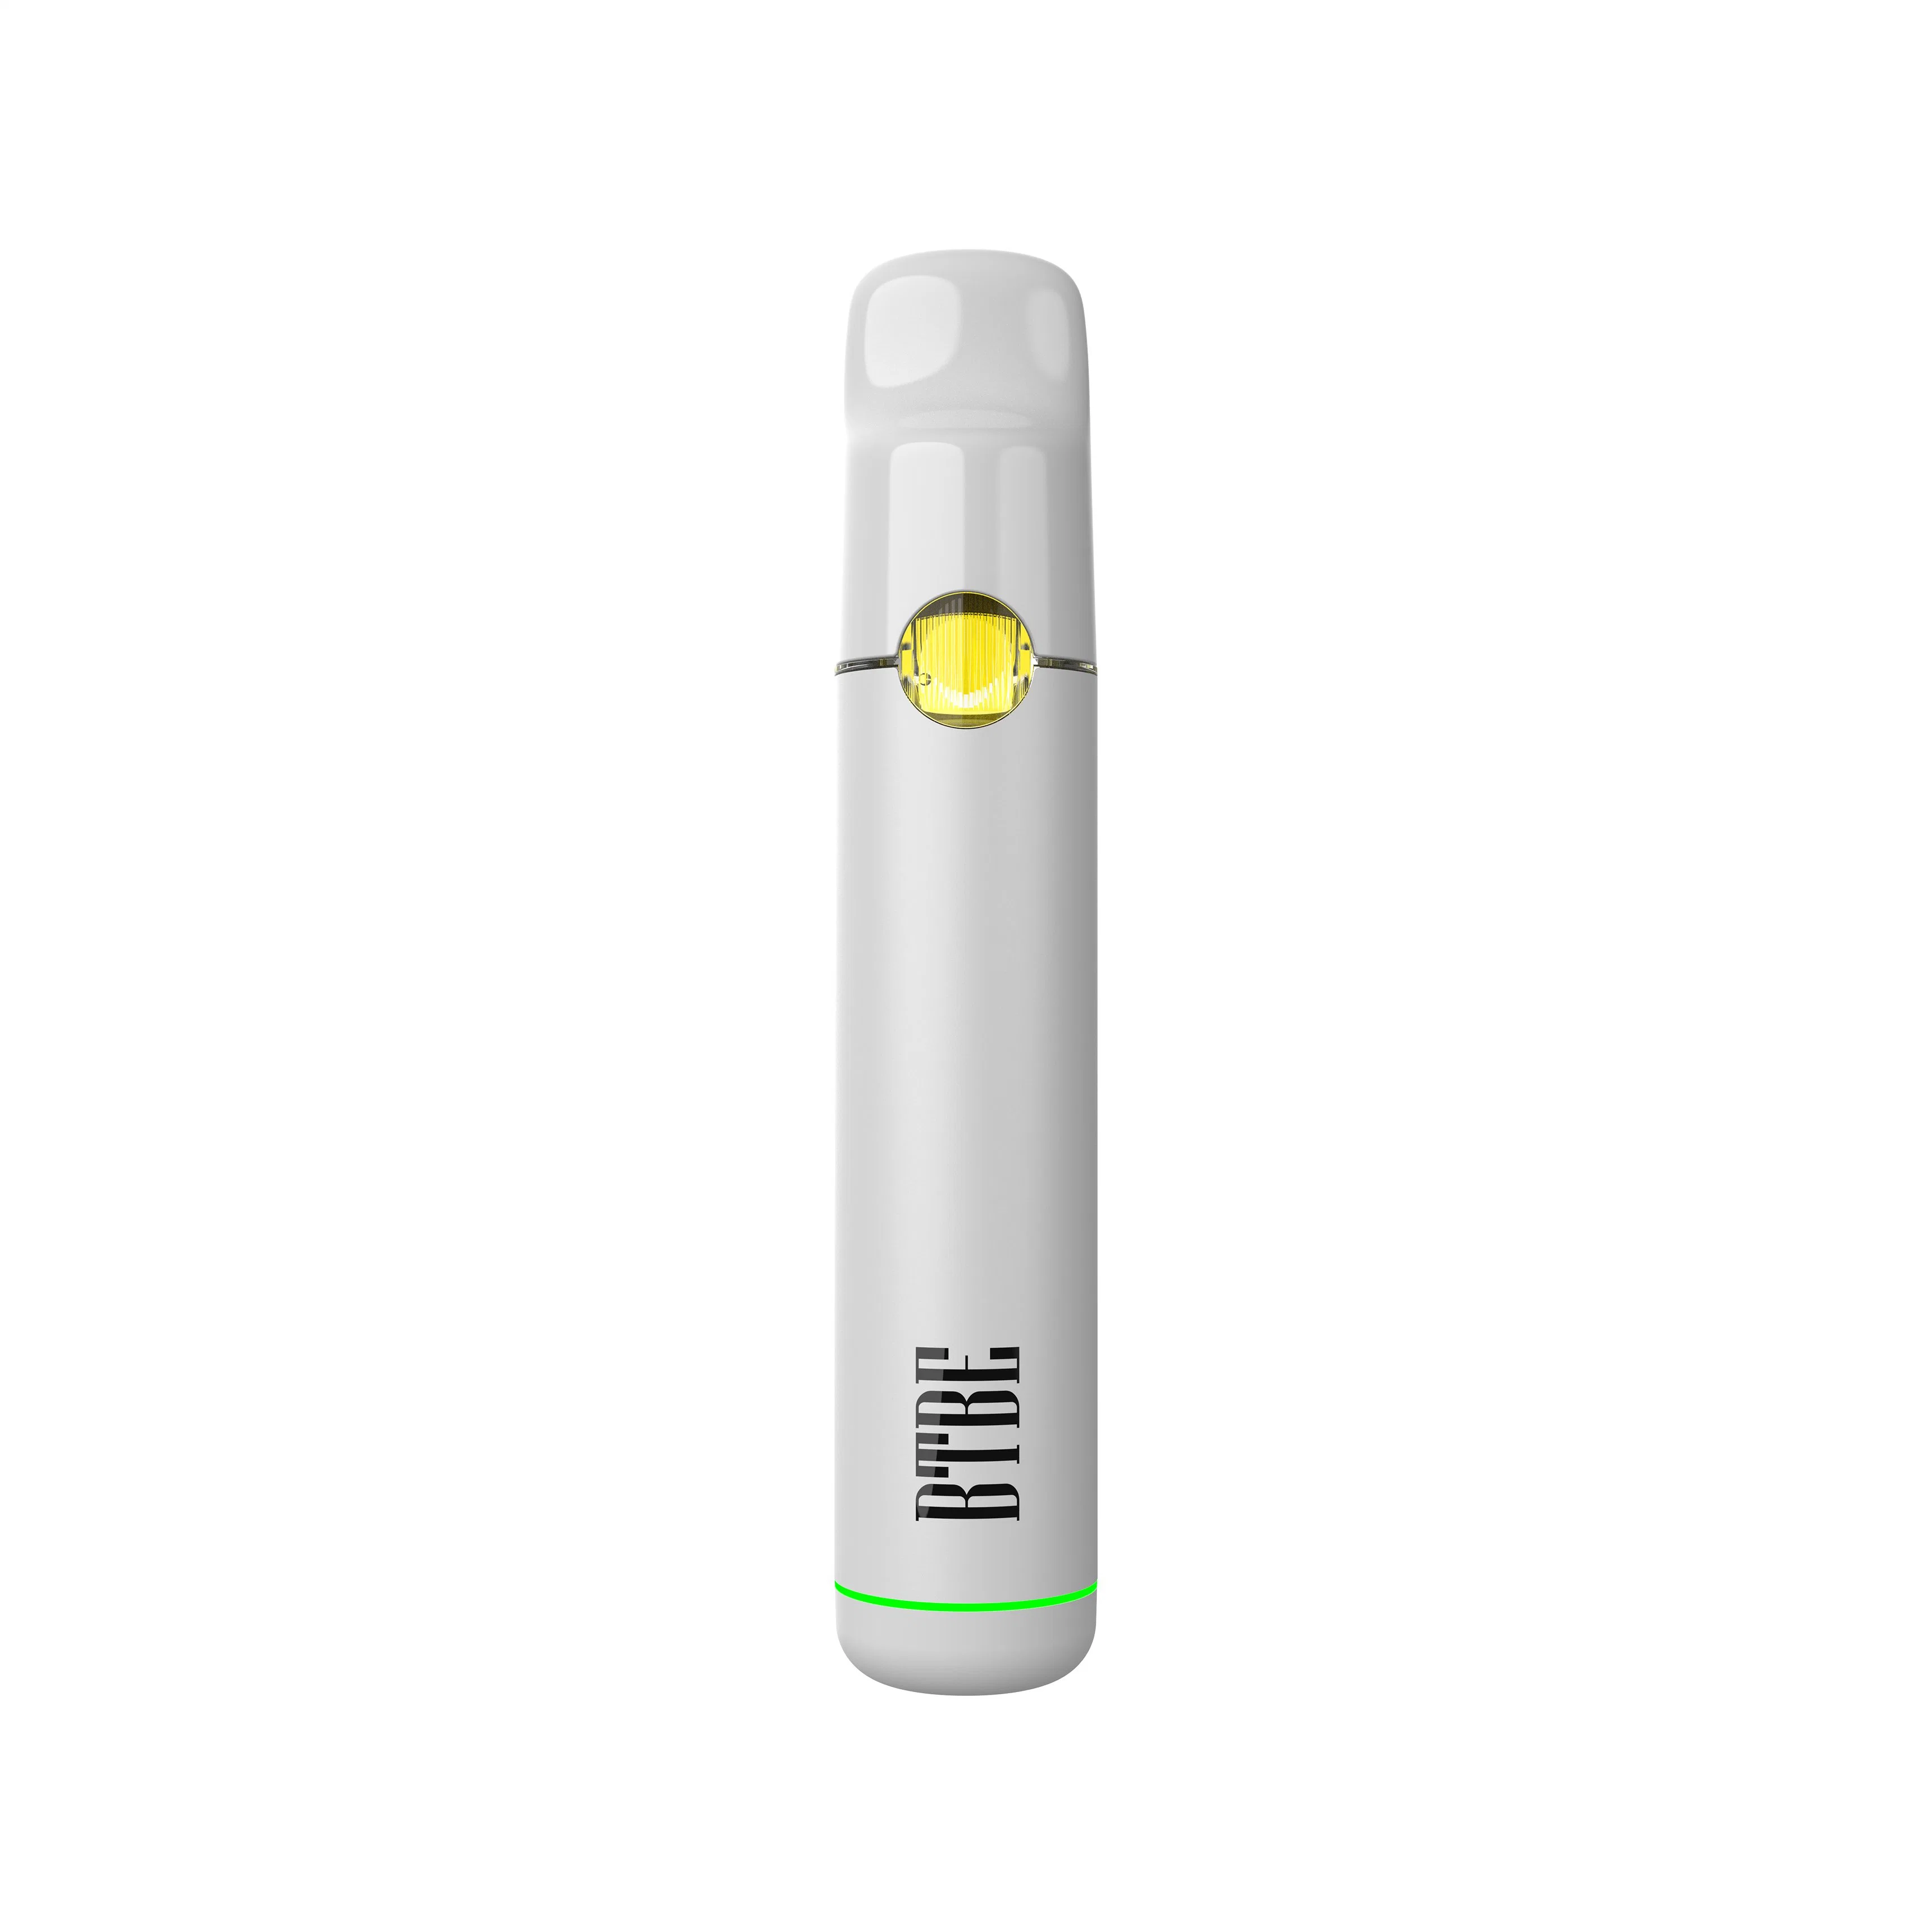 NextVAPOR Low Temp 1,0 мл Health Electronic Cigarette Vaporizer Pen